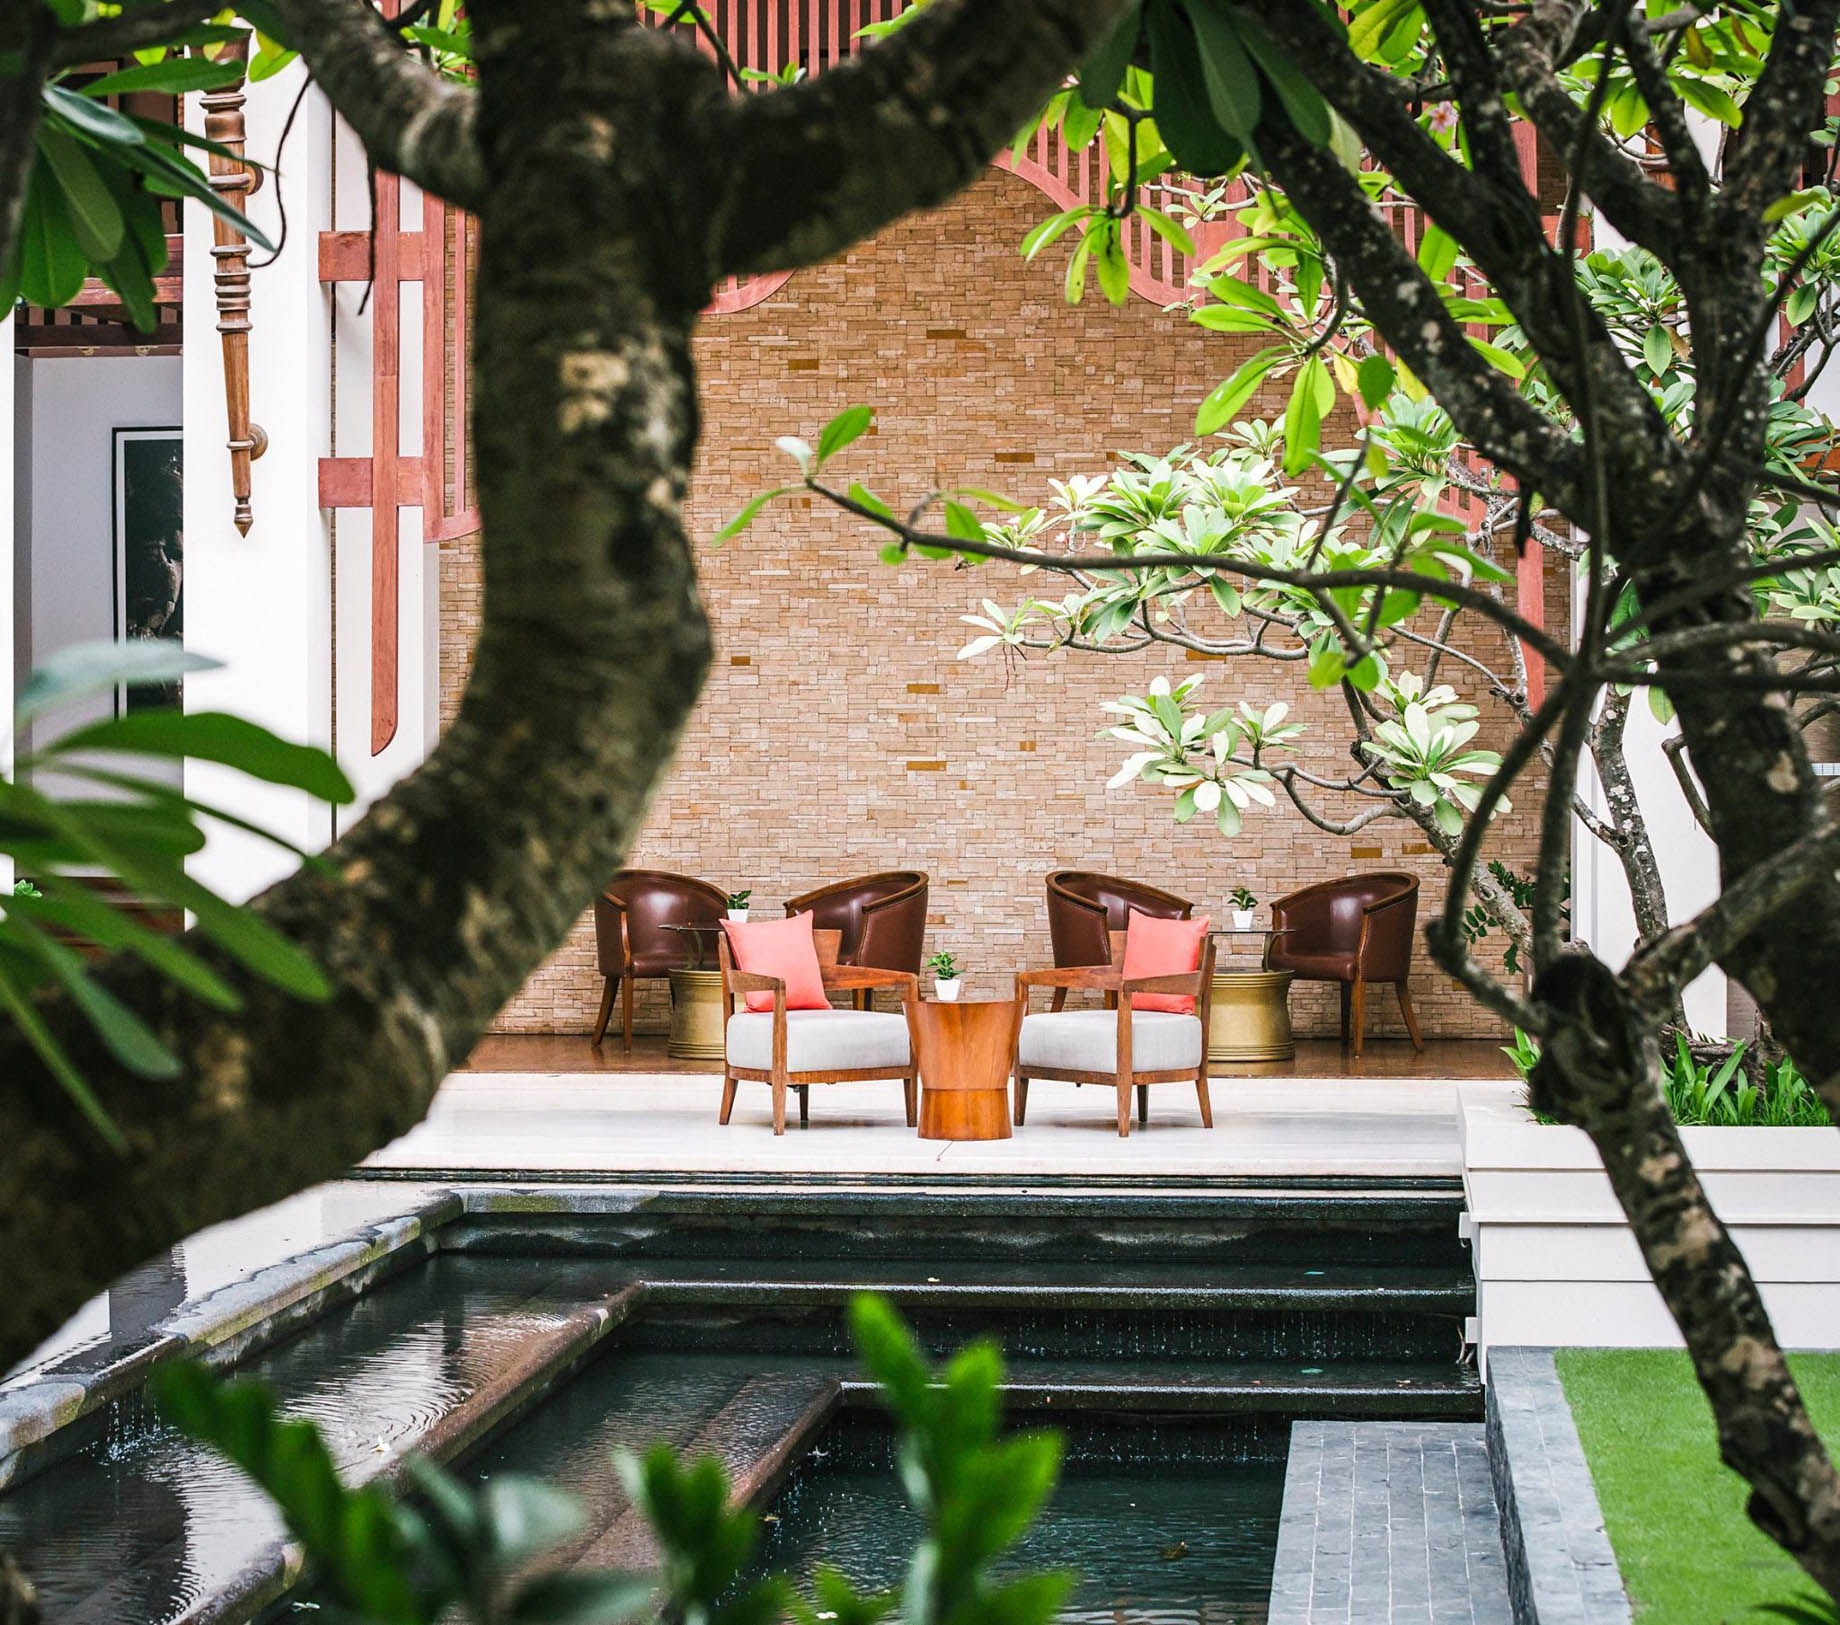 Anantara Angkor Resort – Siem Reap, Cambodia – Courtyard